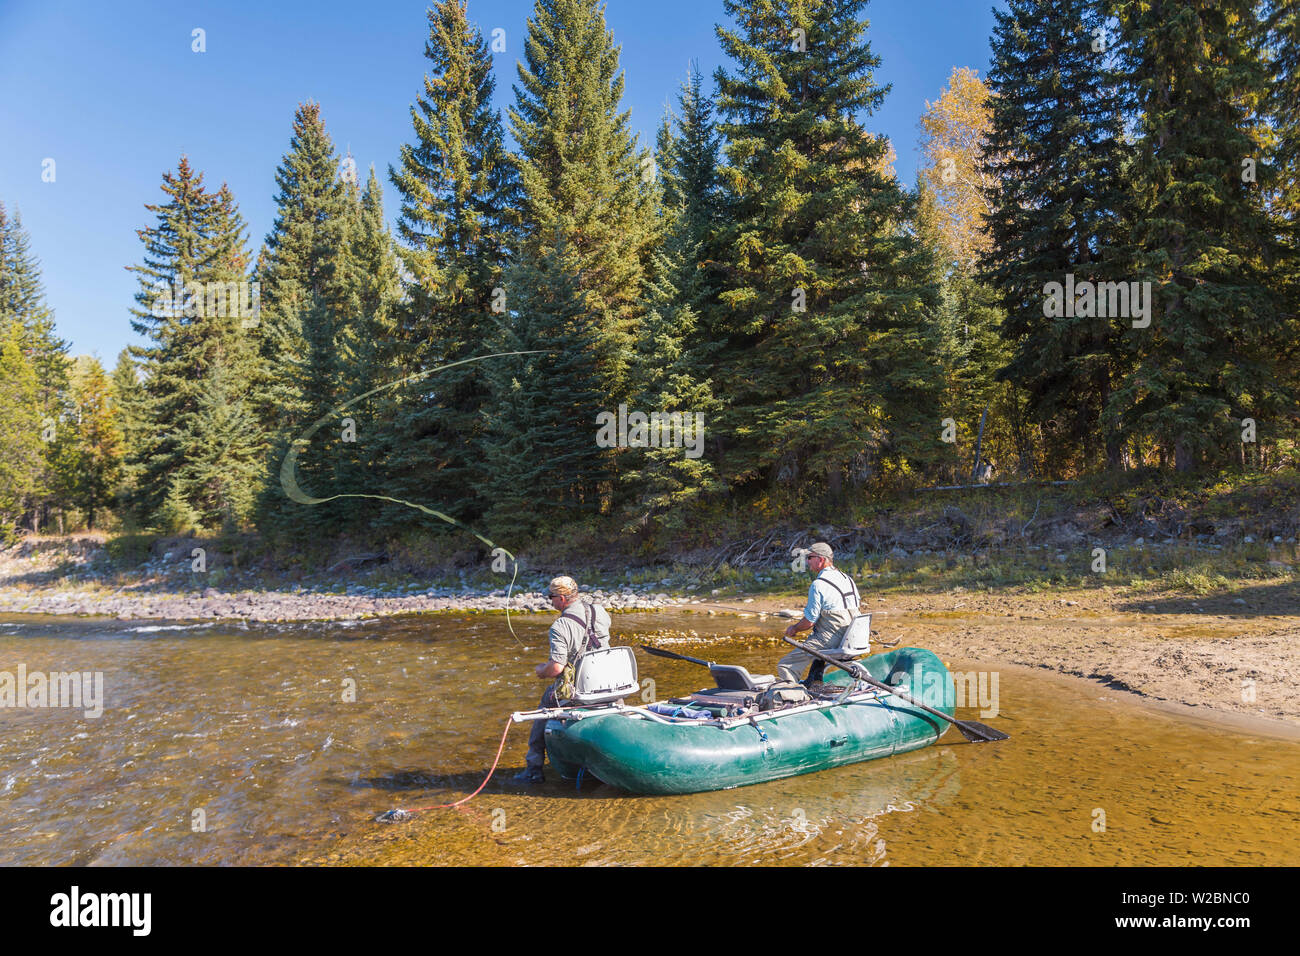 Fly fishermen casting & fishing from boat, British Columbia, Canada Stock Photo